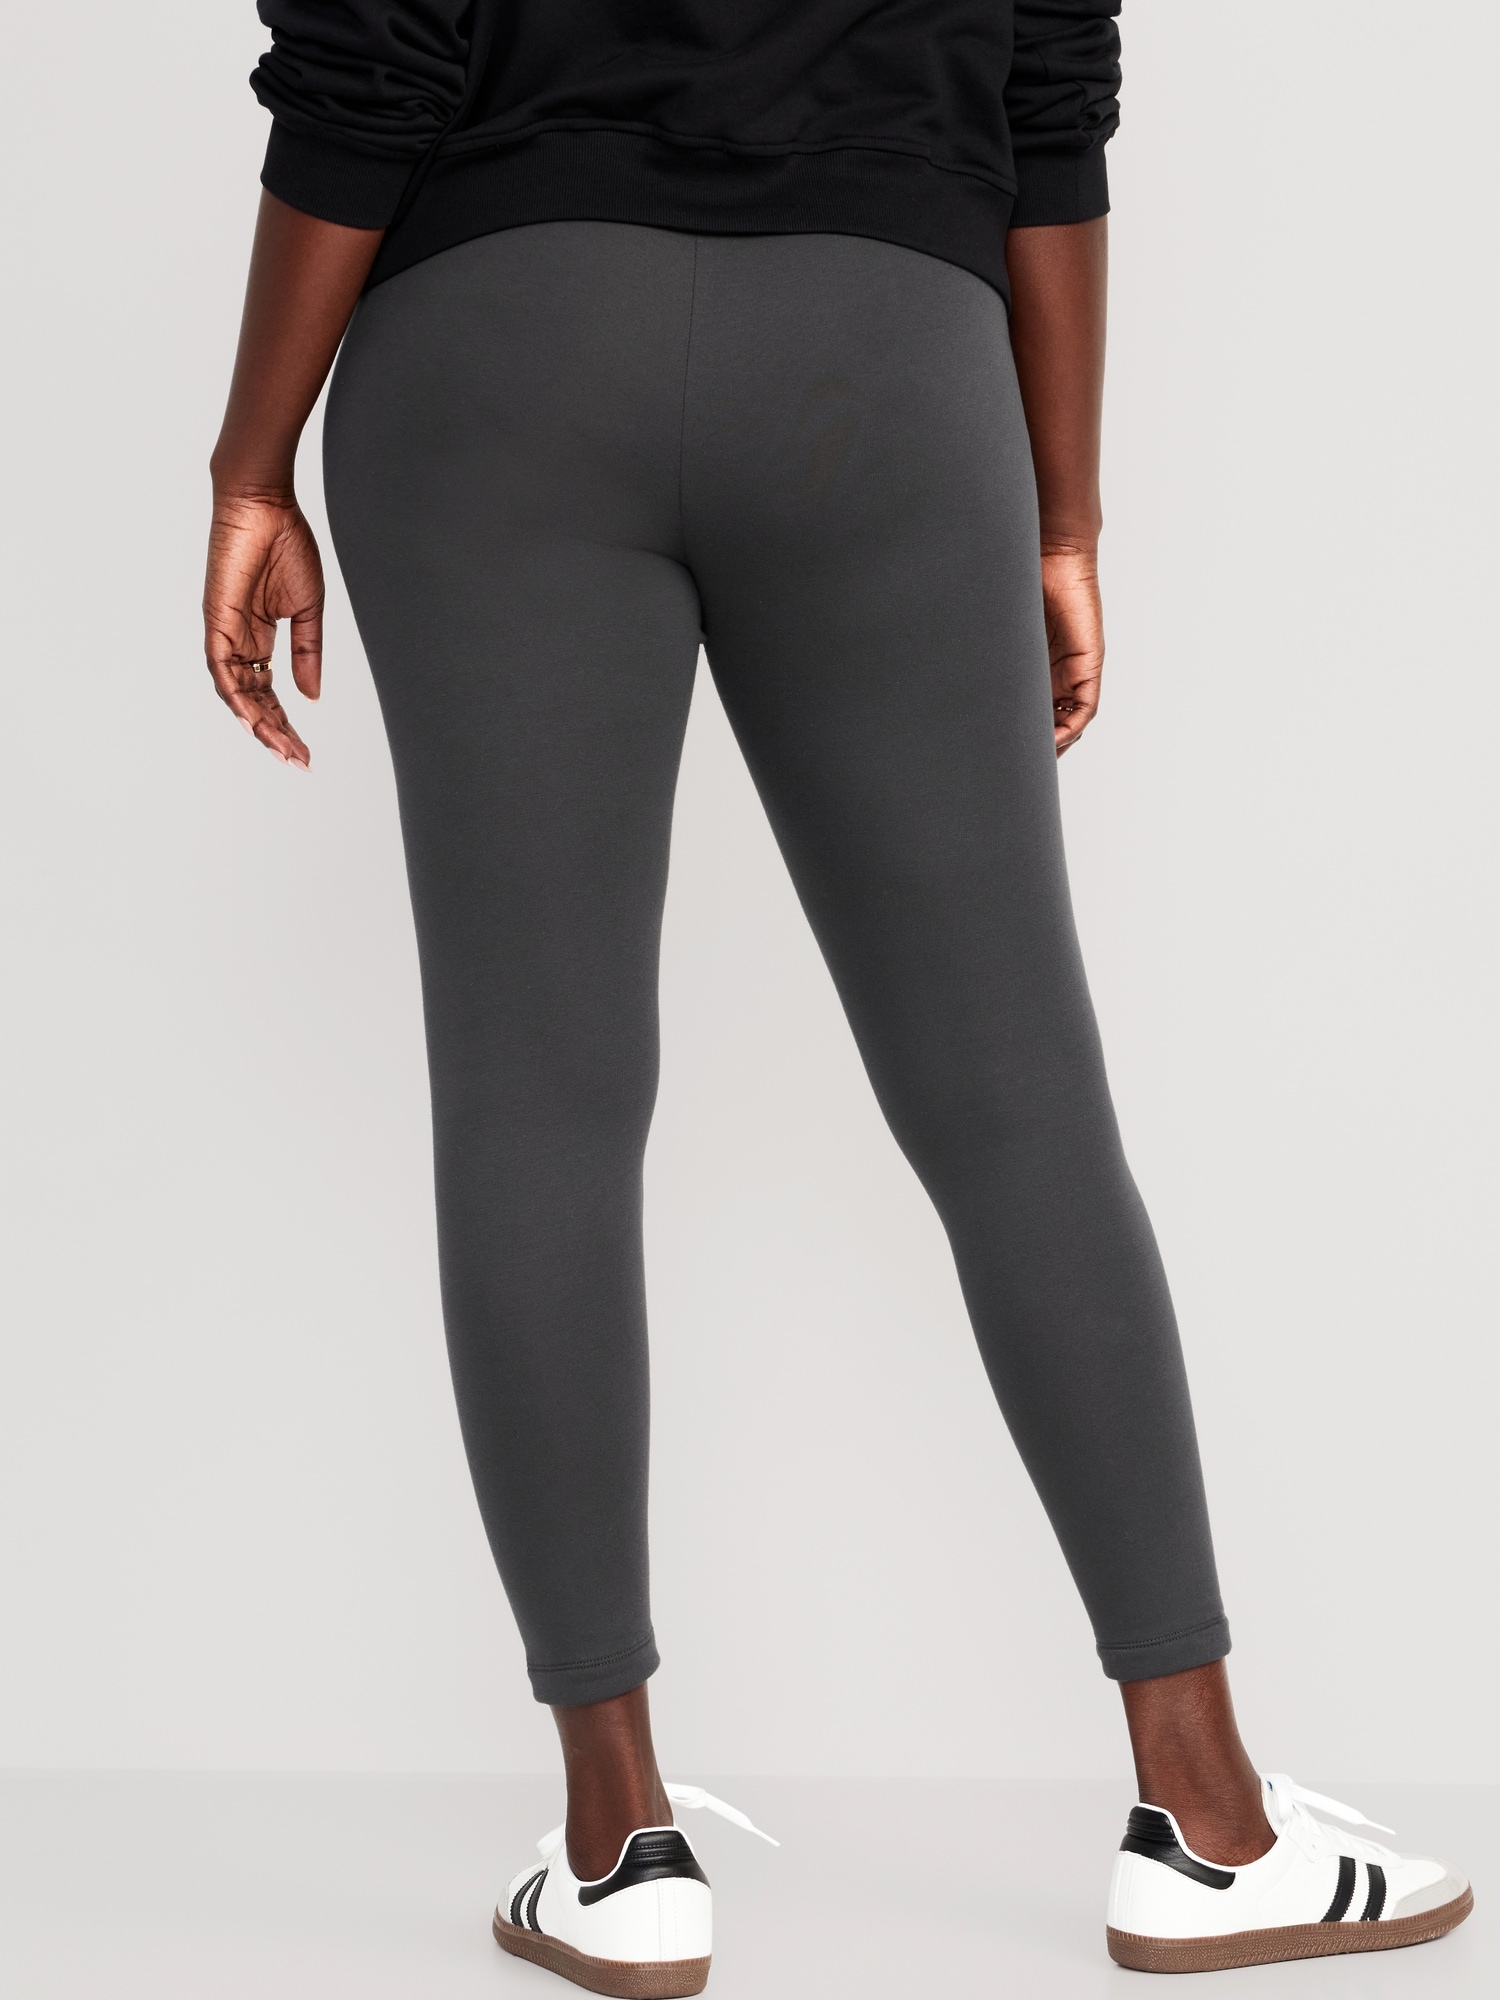 Lululemon Leggings Black Size 2 - $70 (28% Off Retail) New With